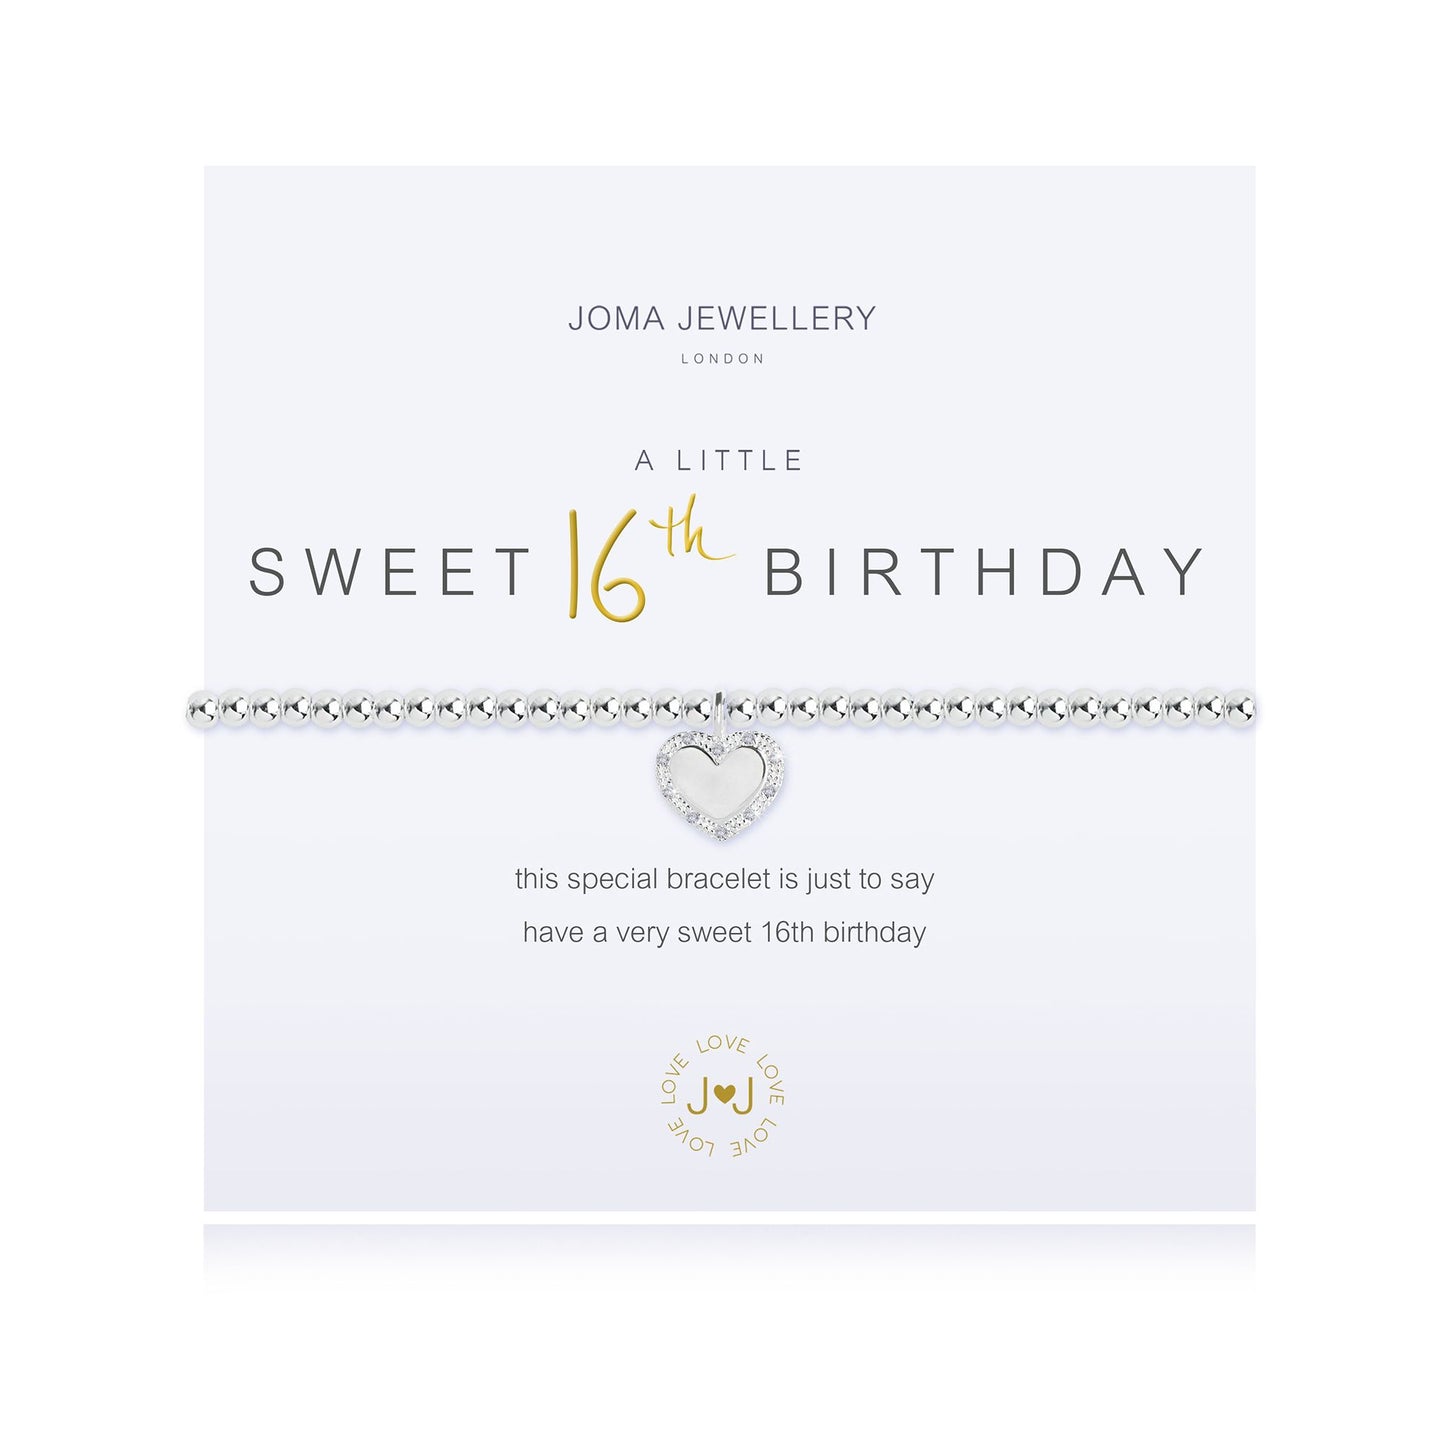 Joma Jewellery 'A Little Sweet 16th Birthday' Bracelet